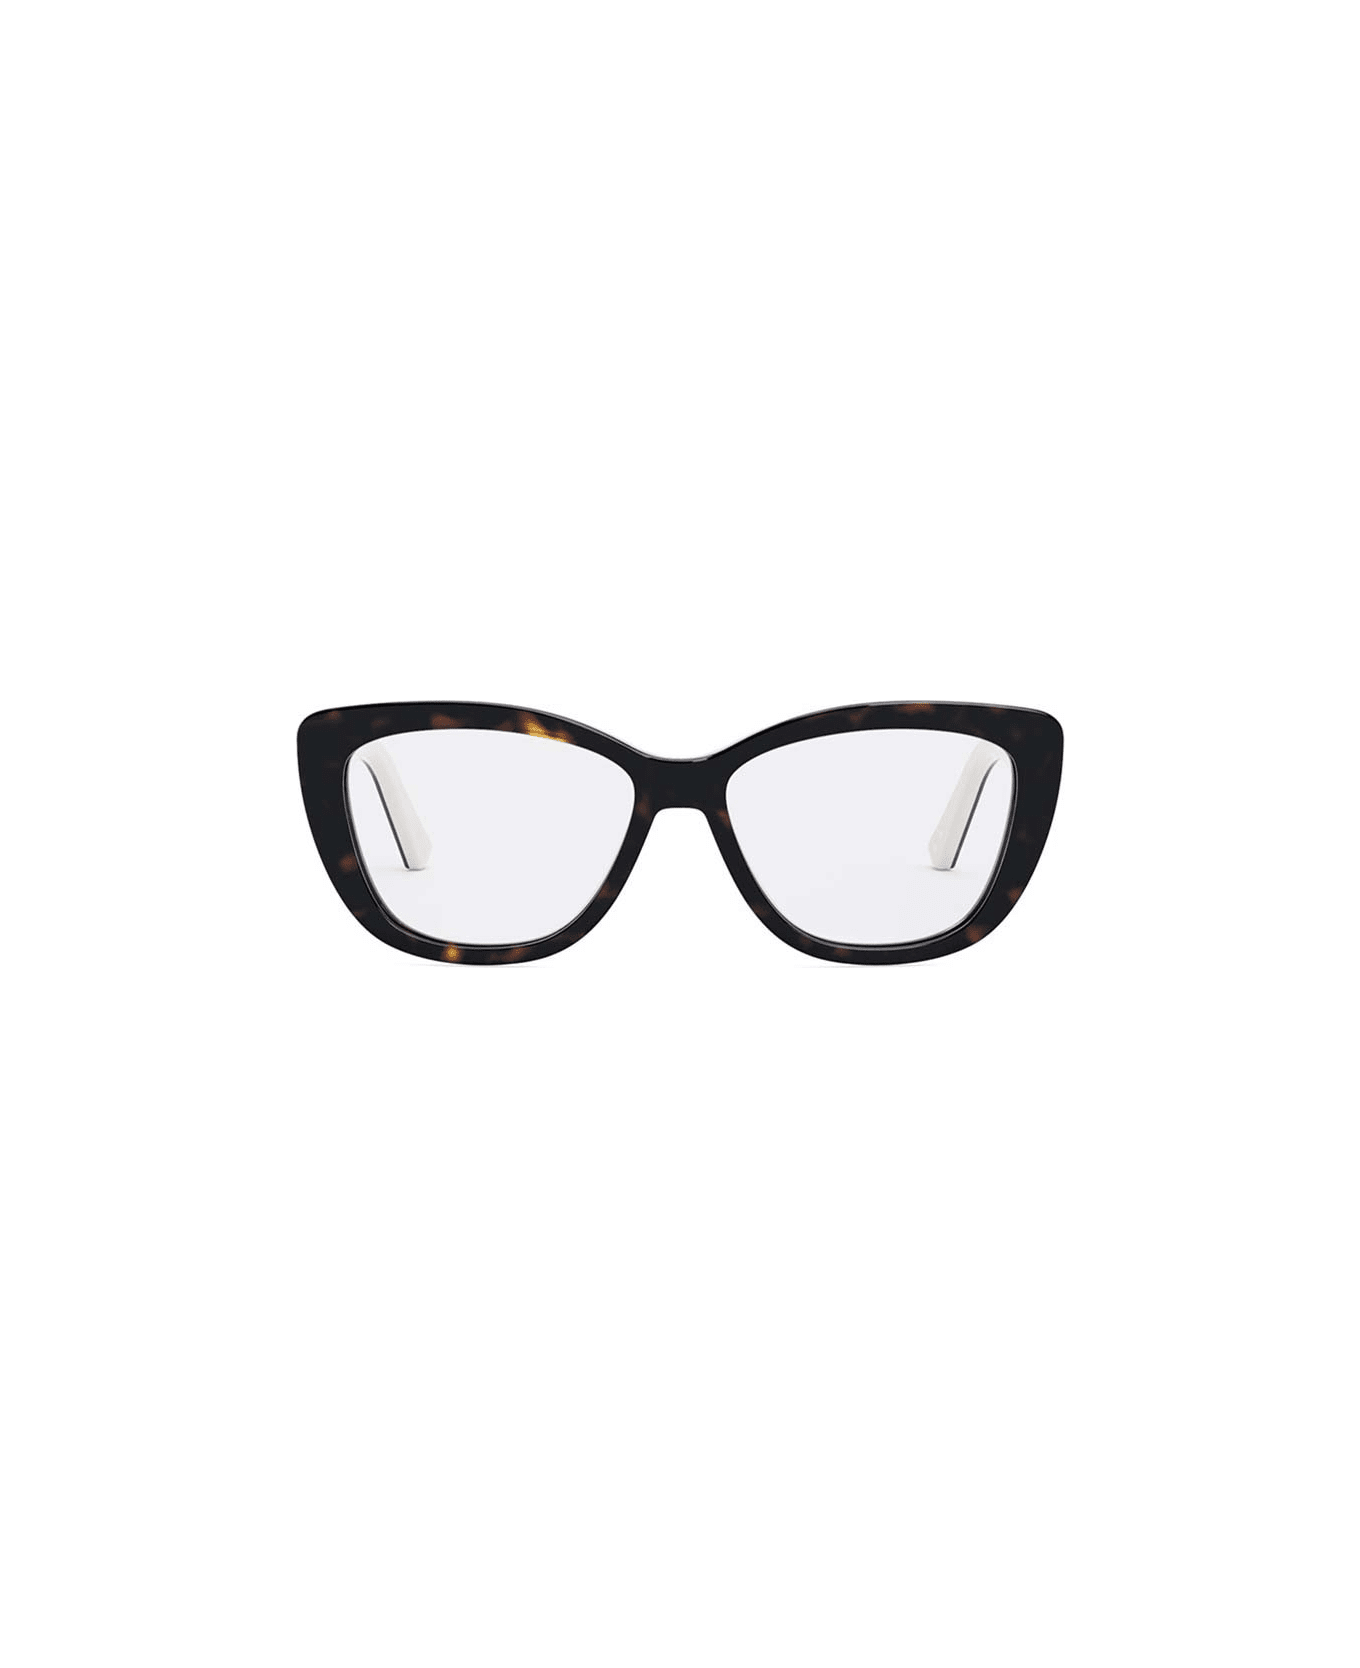 Dior Eyewear Glasses - Havana